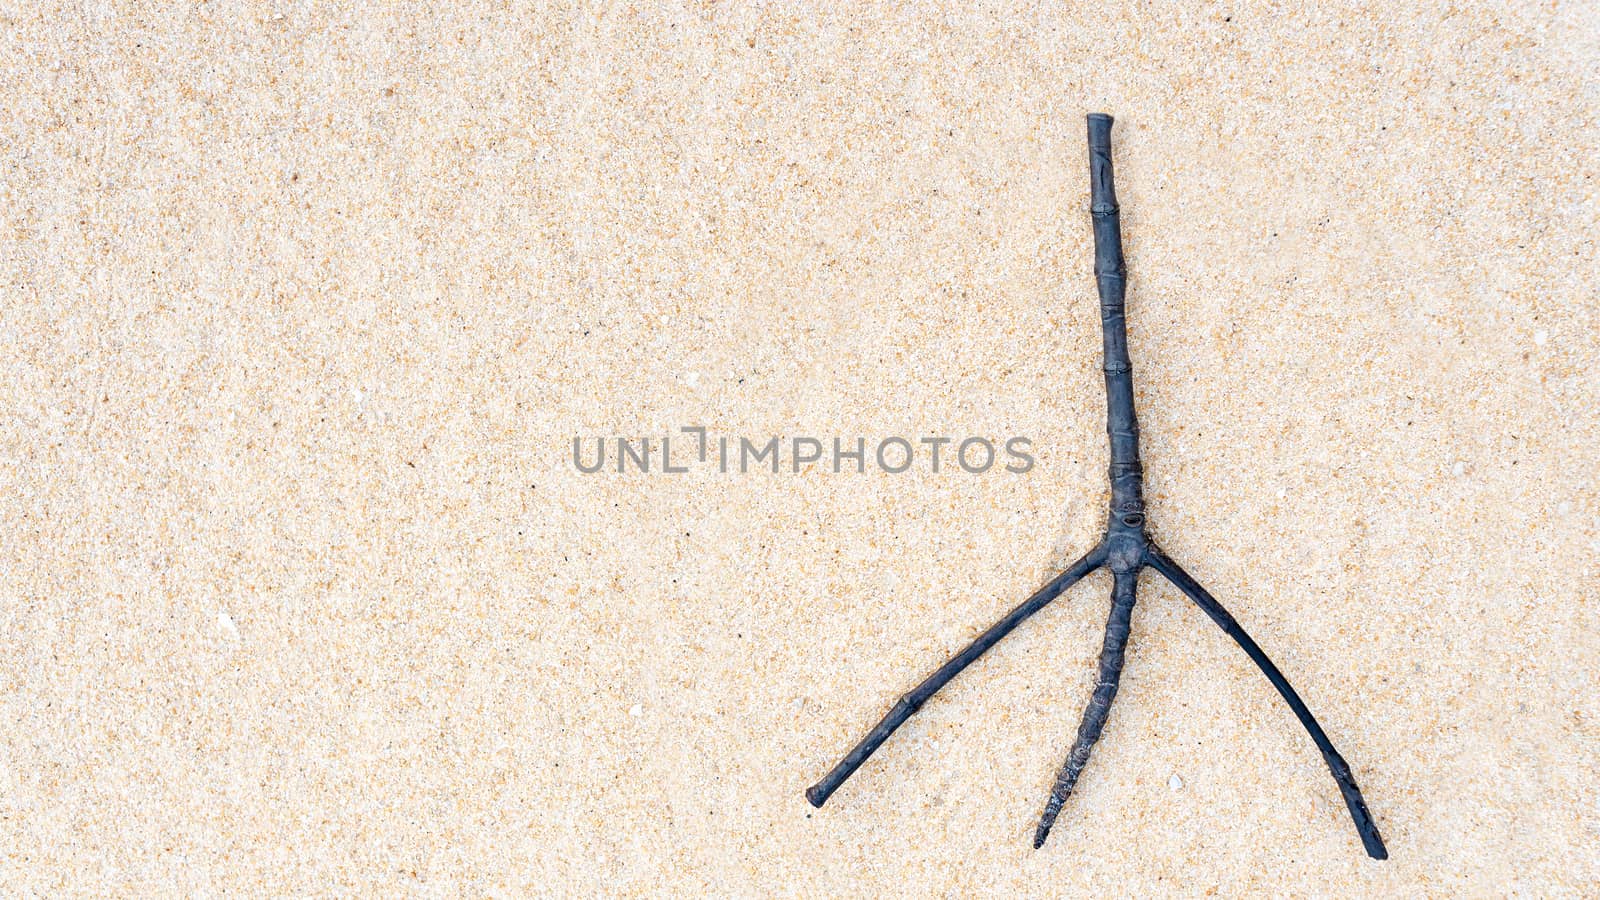 Twig on sand, twig look like Eiffel Tower.